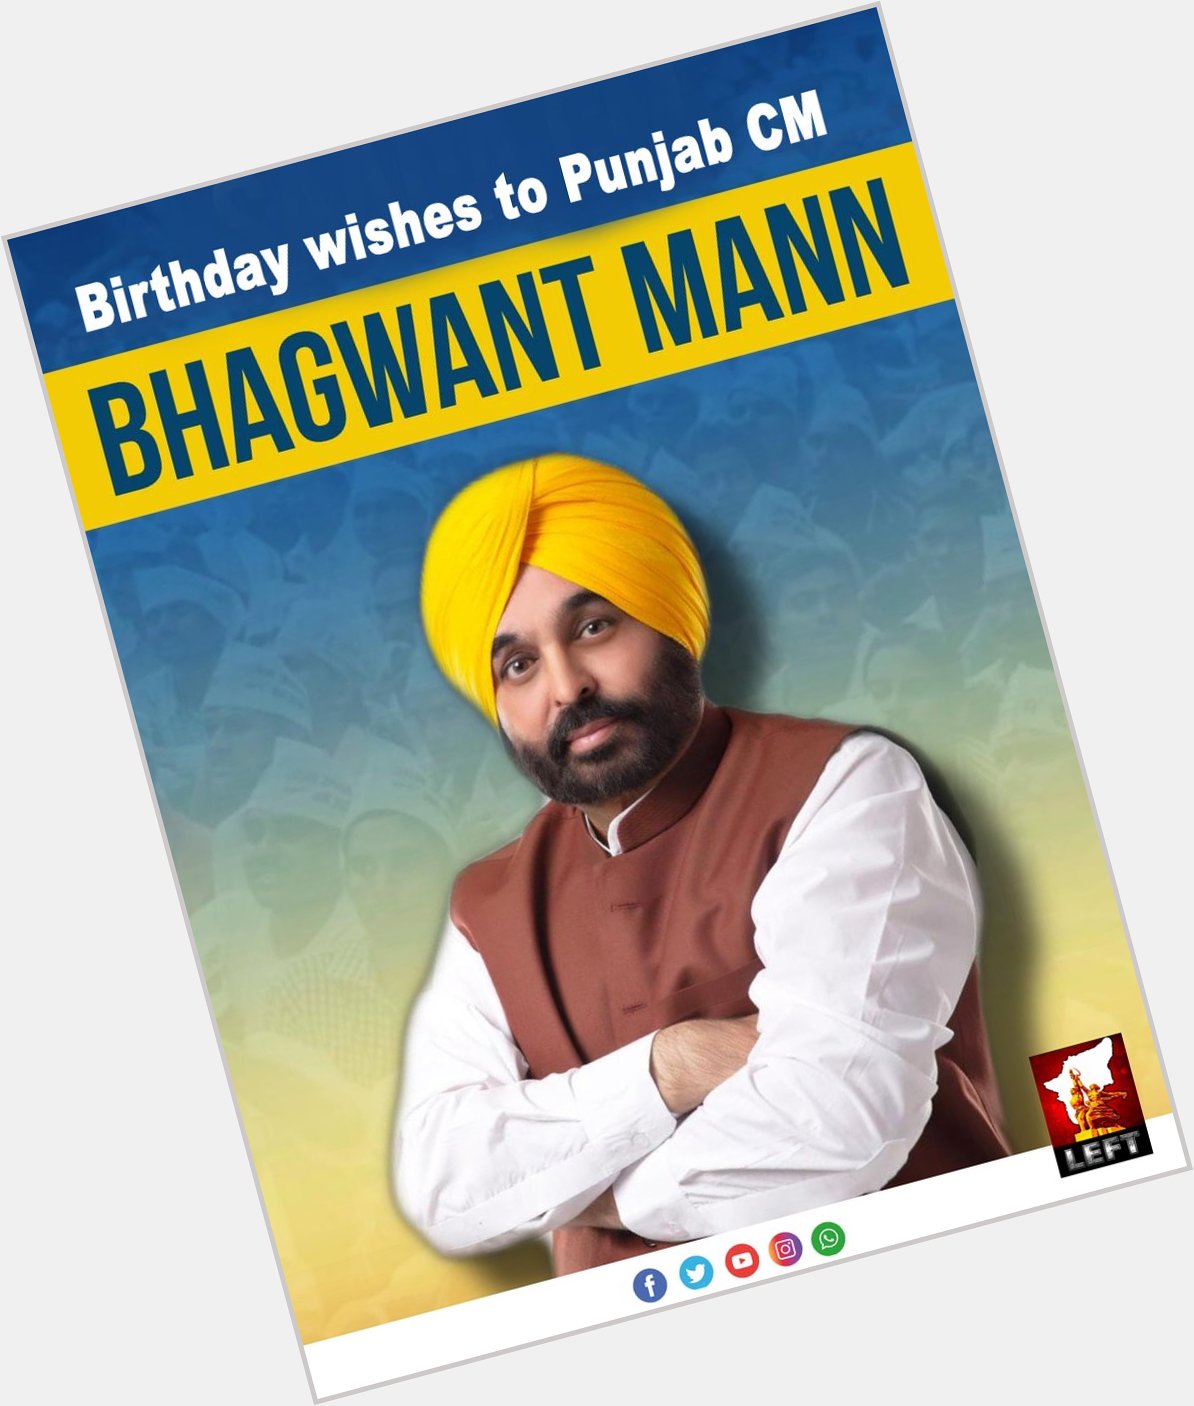 Happy birthday to Aam Aadmi leaders, Punjab Chief Minister Comrade Bhagwant Mann. 